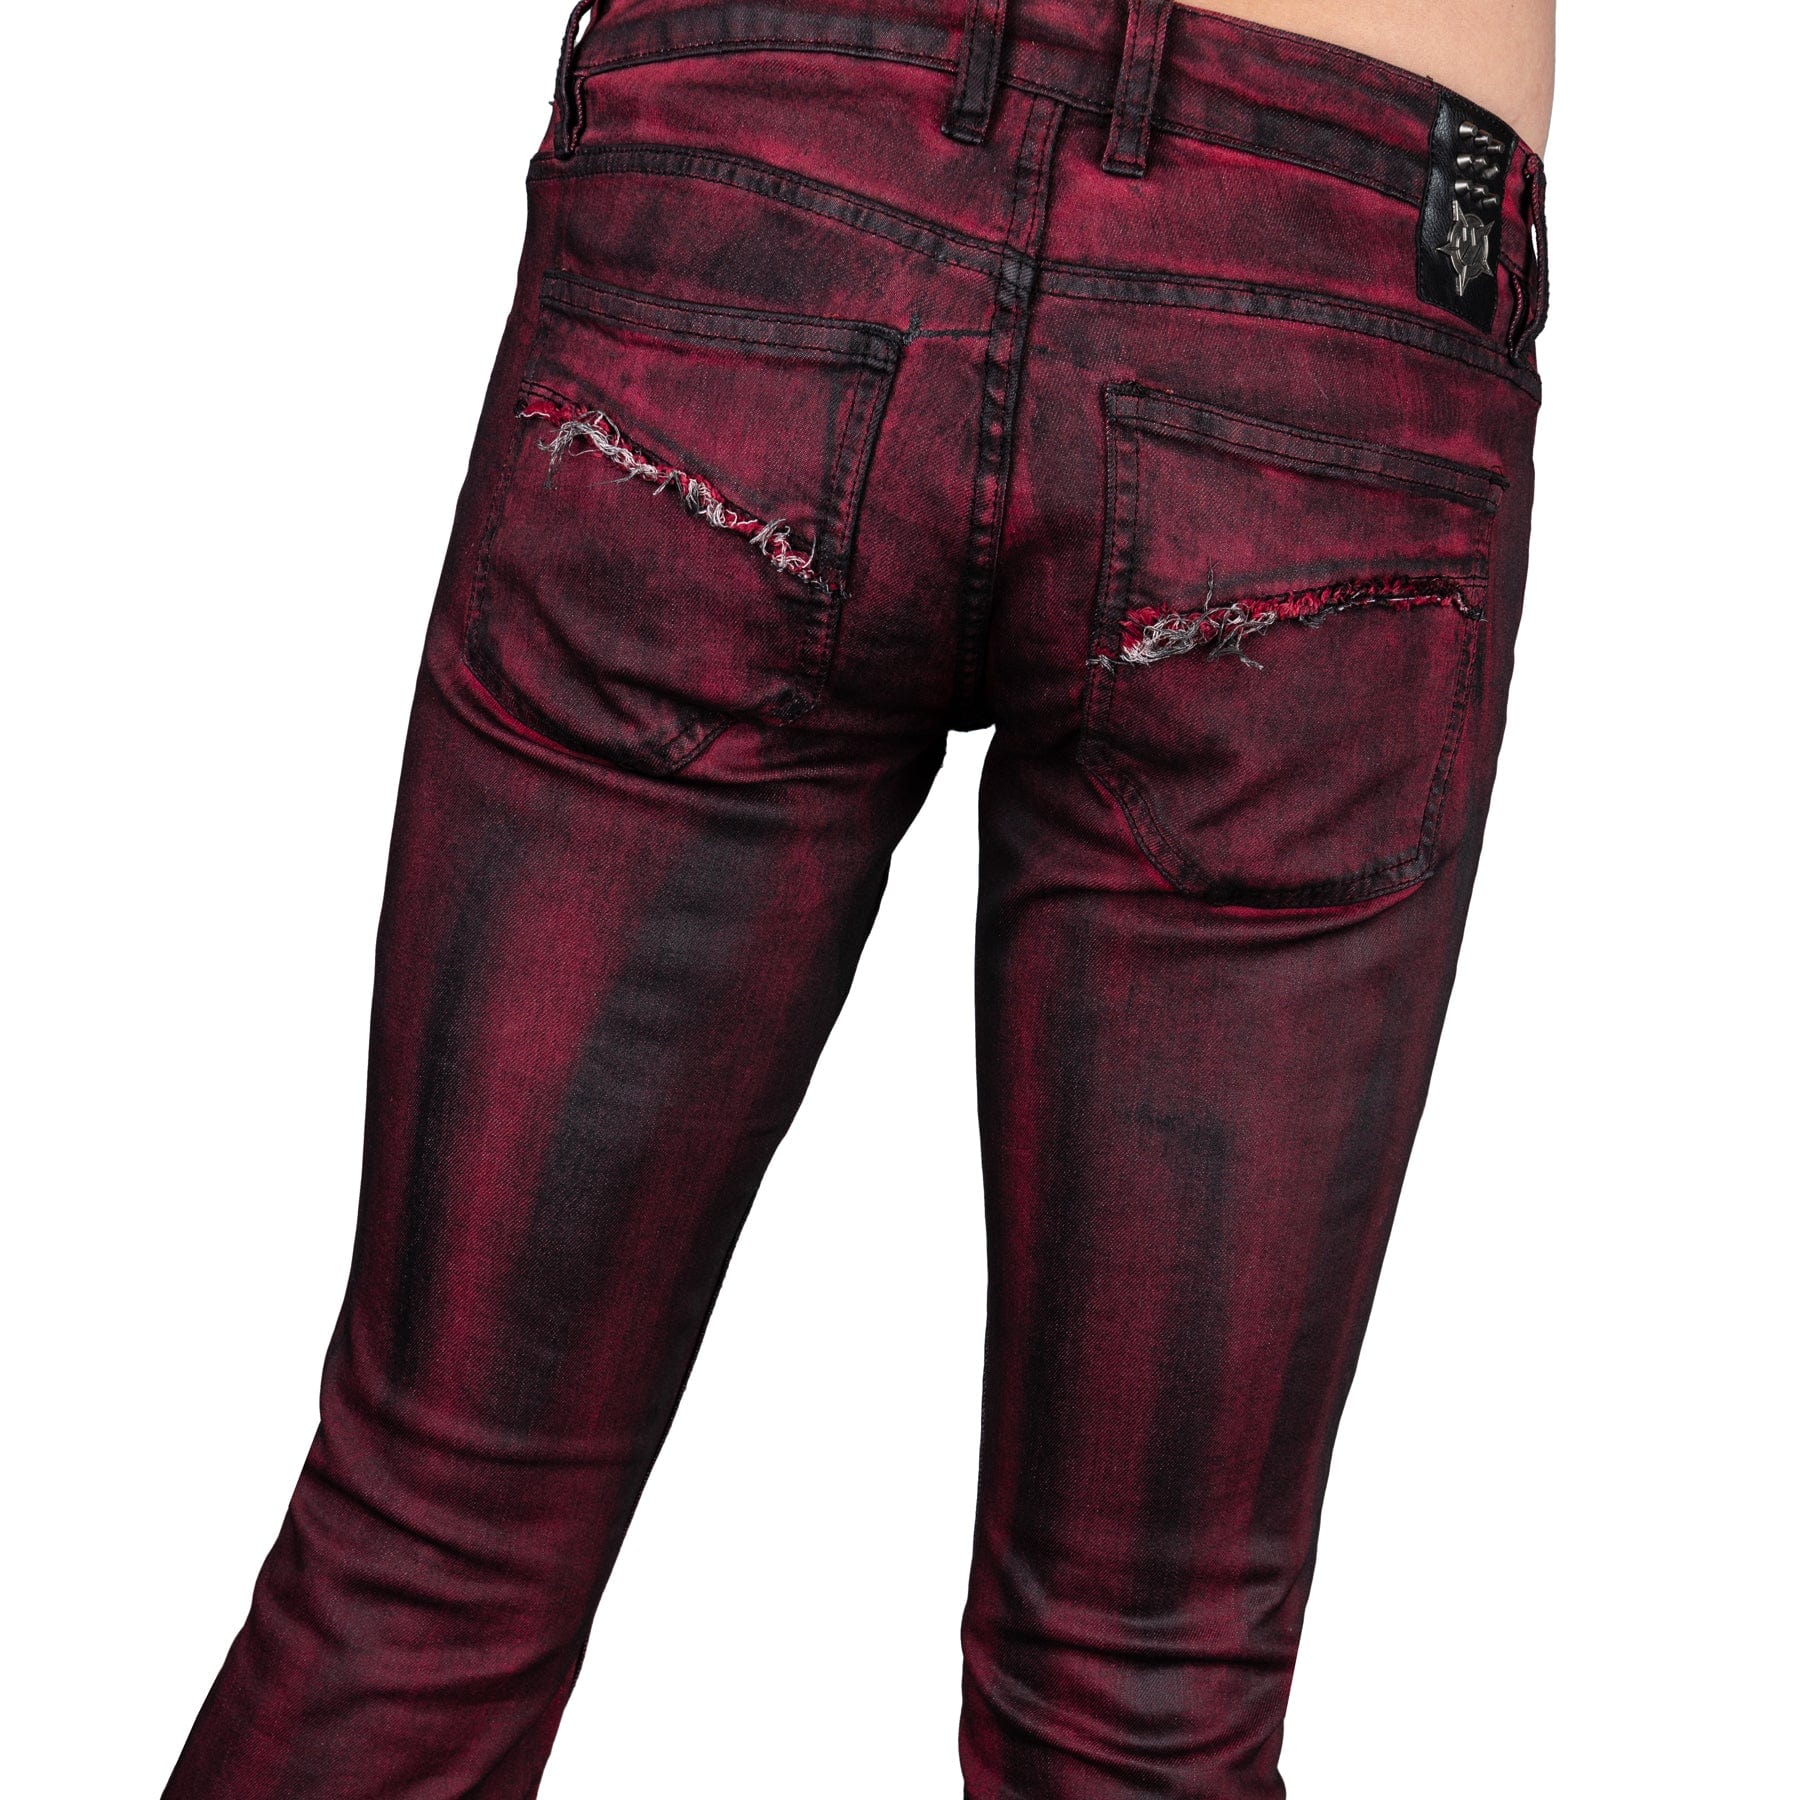 Wornstar Clothing Mens Jeans. Rampager Coated Denim Jeans - Crimson